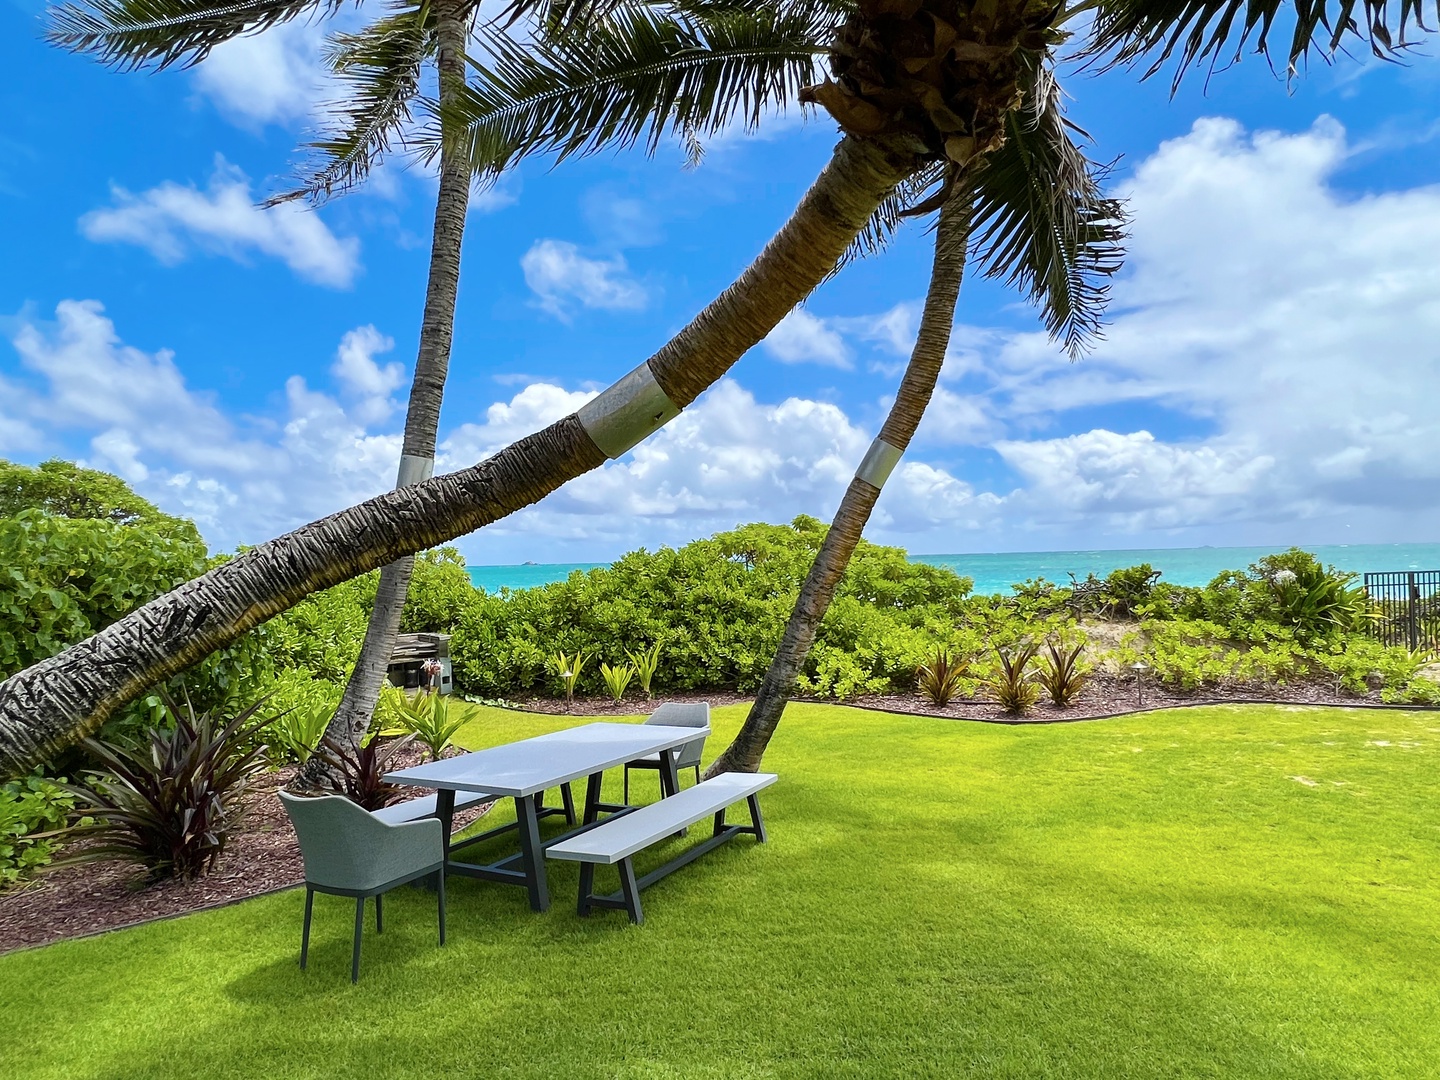 Kailua Vacation Rentals, Kailua Beach Villa - This beachfront villa is located on the famous shores of Kailua Beach